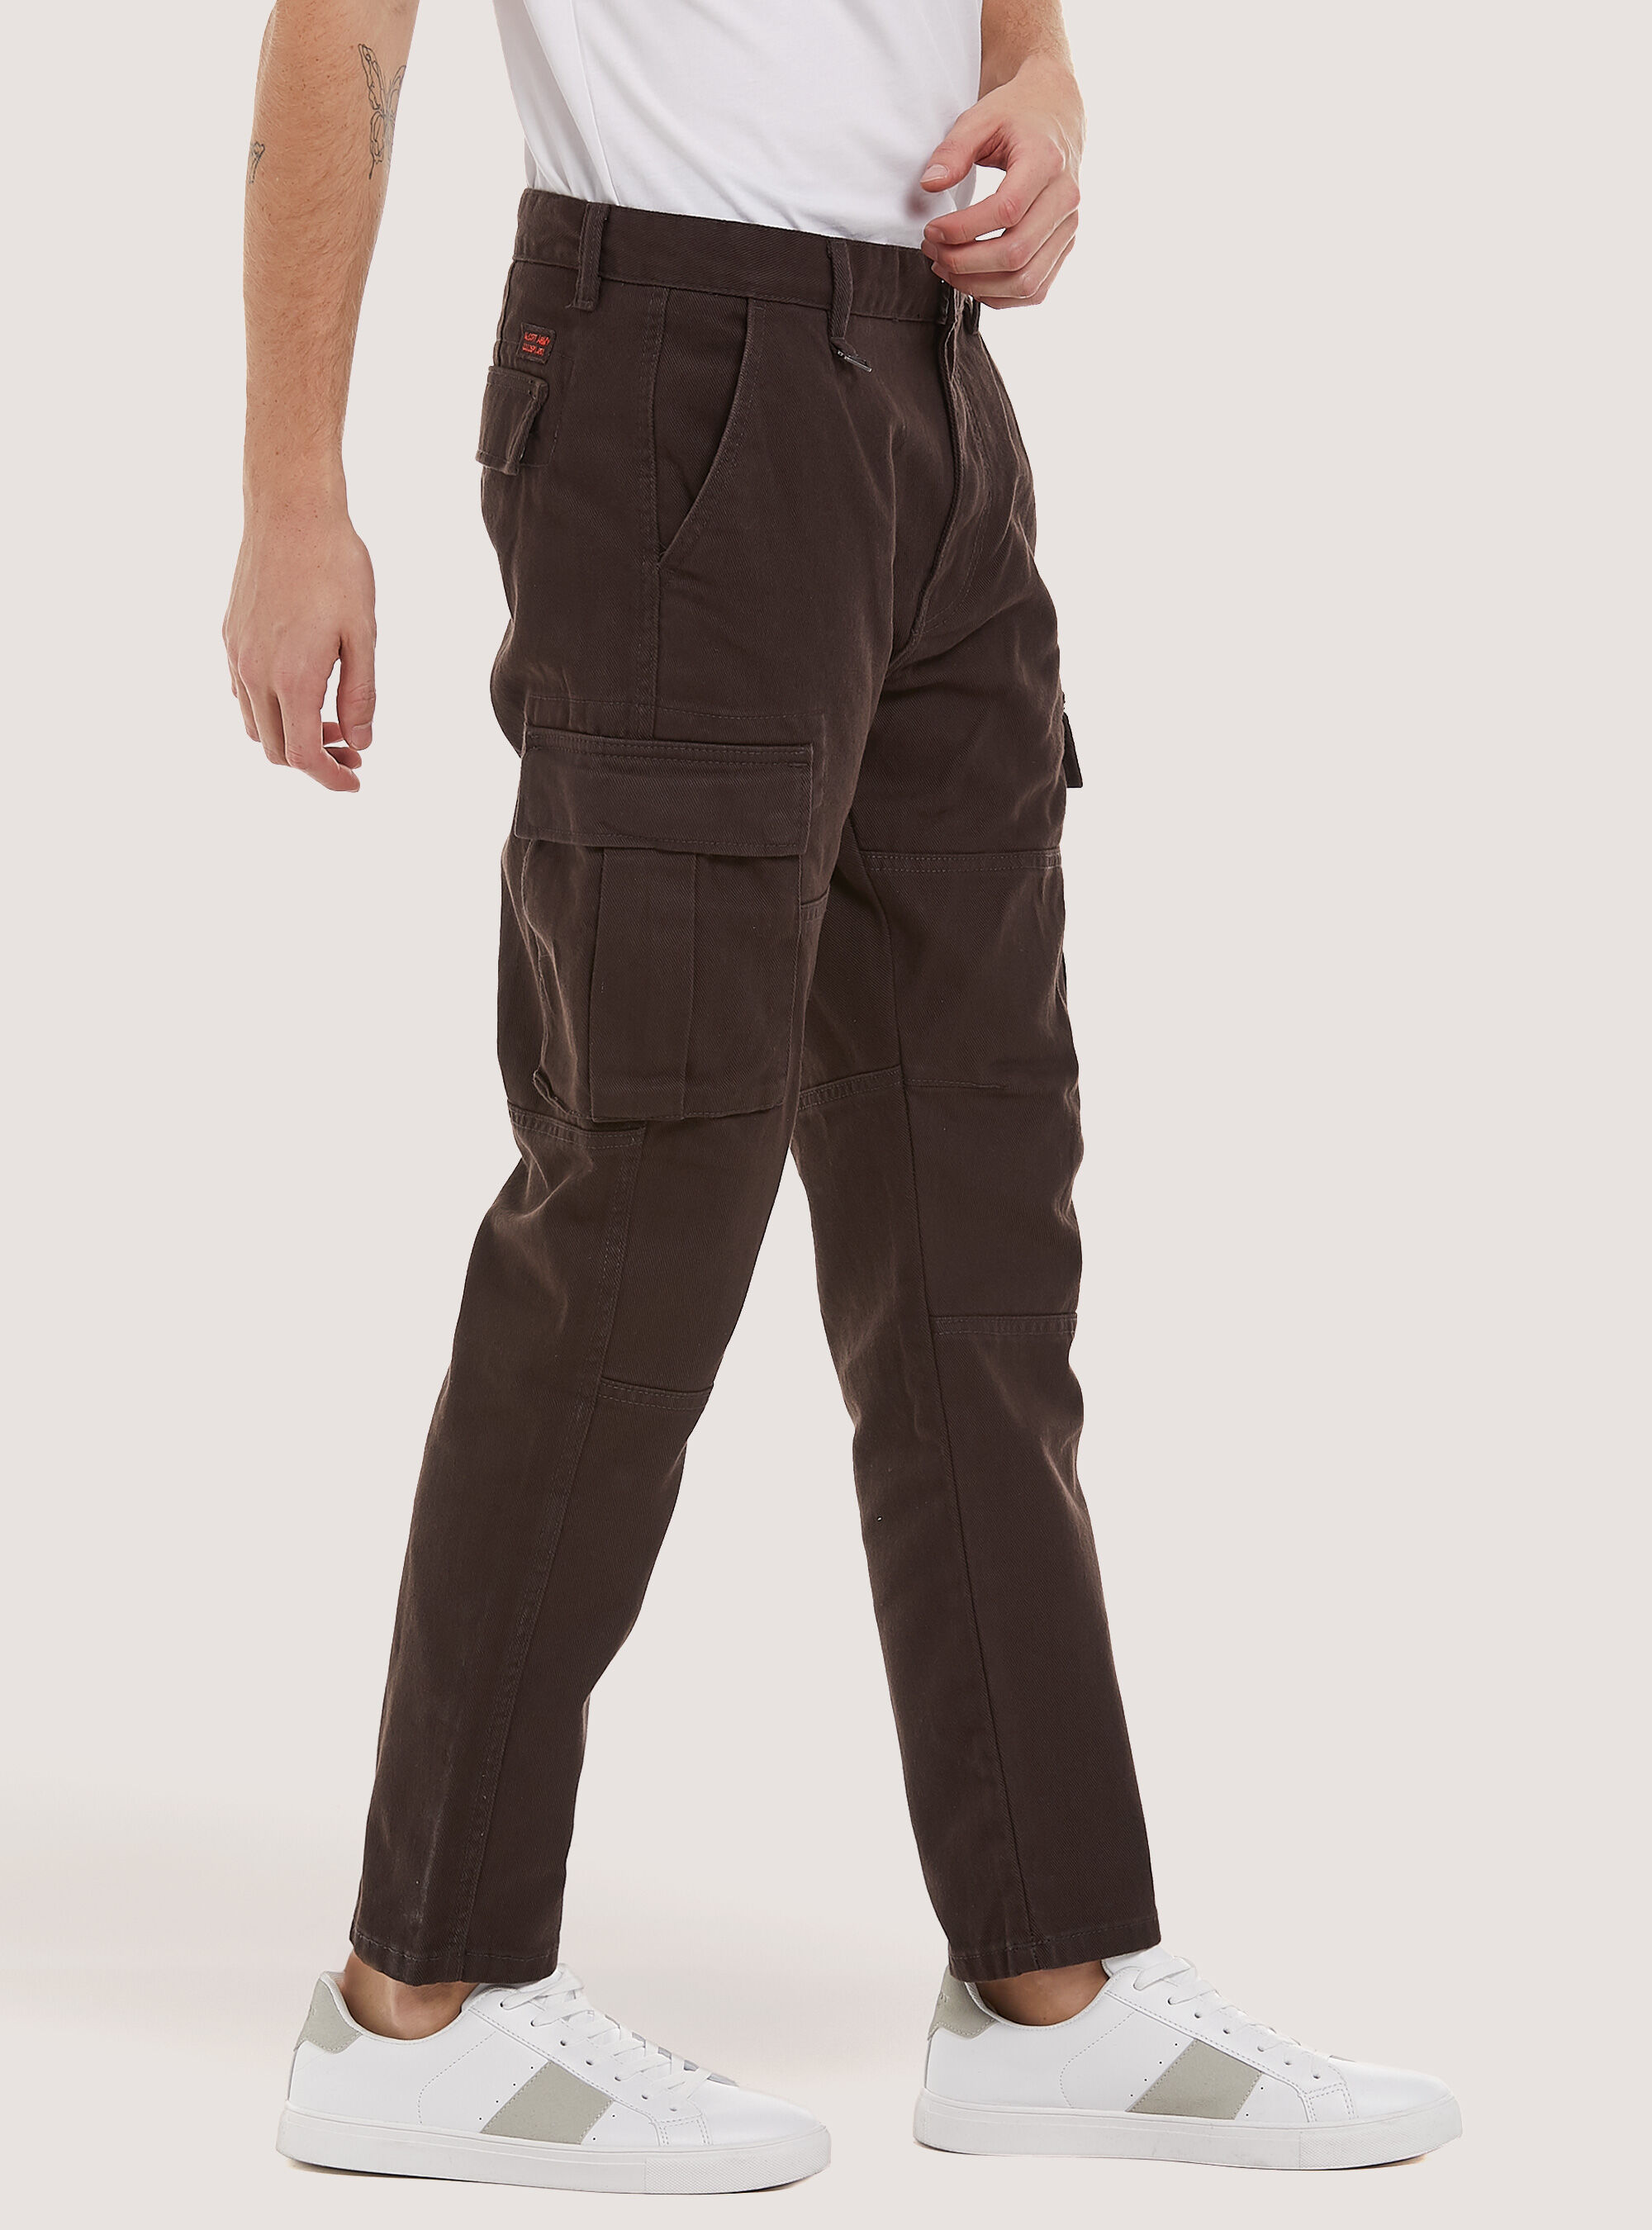 WOMEN FASHION Trousers Basic NoName Chino trouser discount 99% Black 40                  EU 